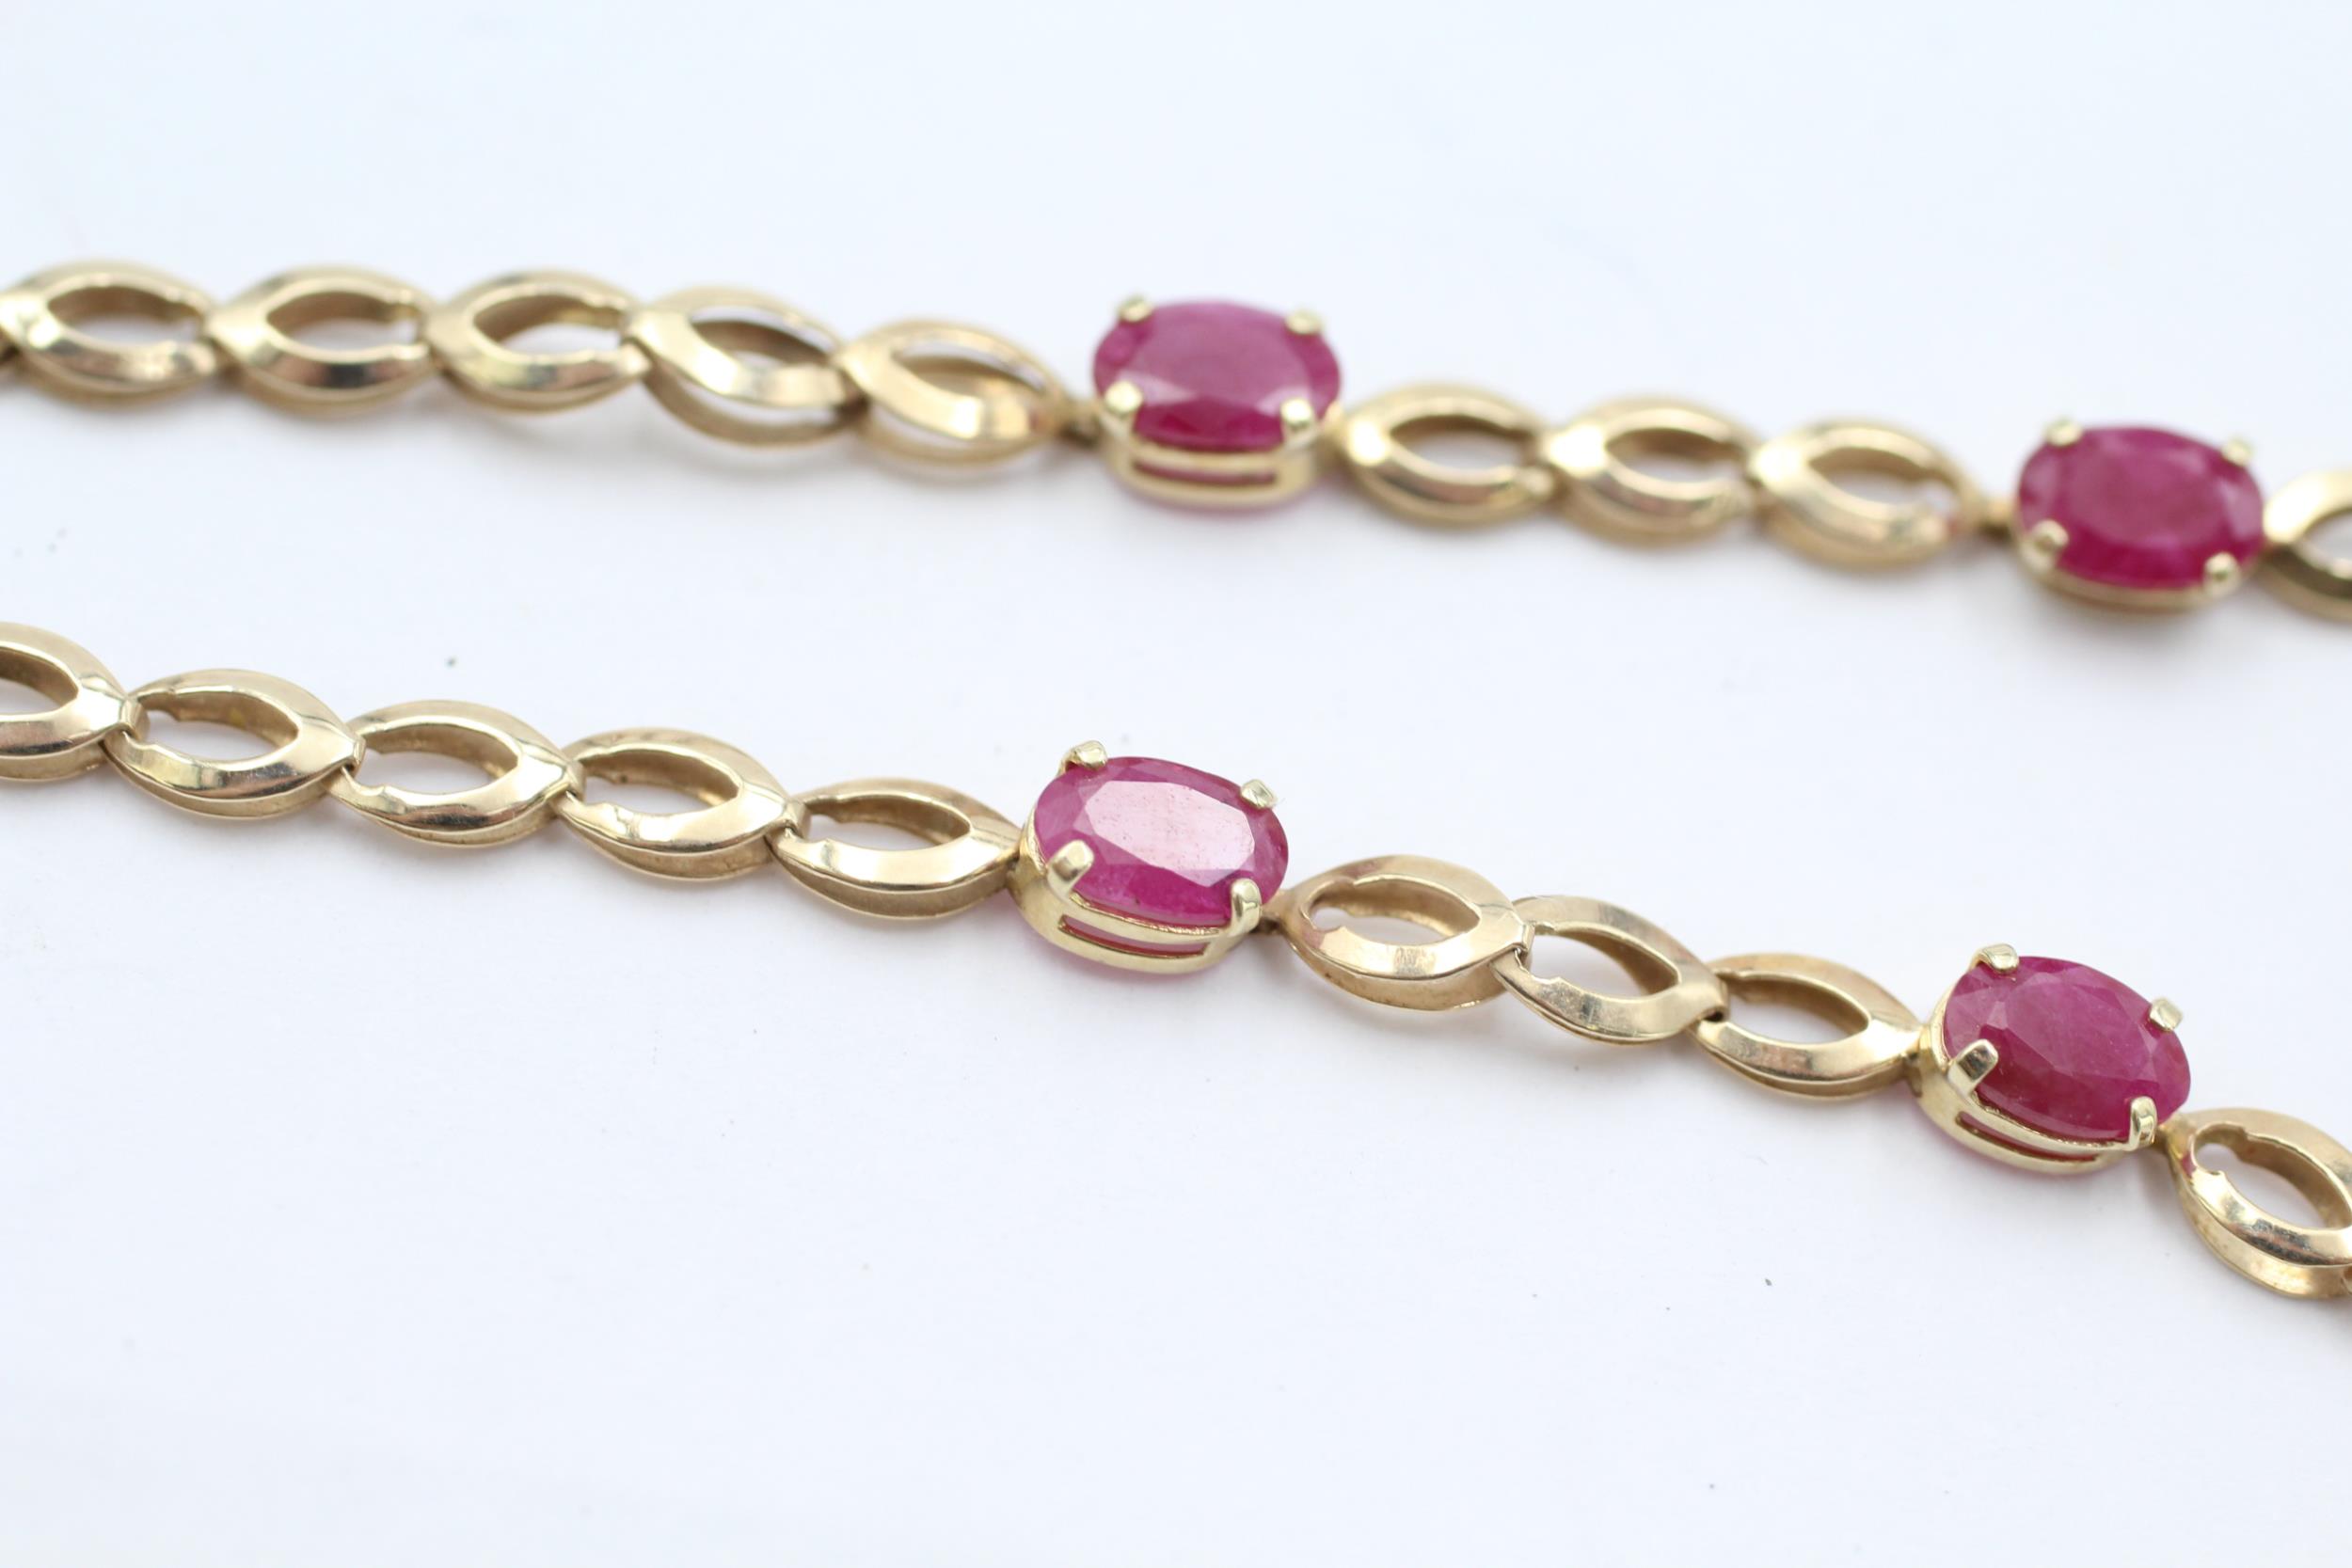 10ct gold ruby bracelet - 2.8 g - Image 4 of 5